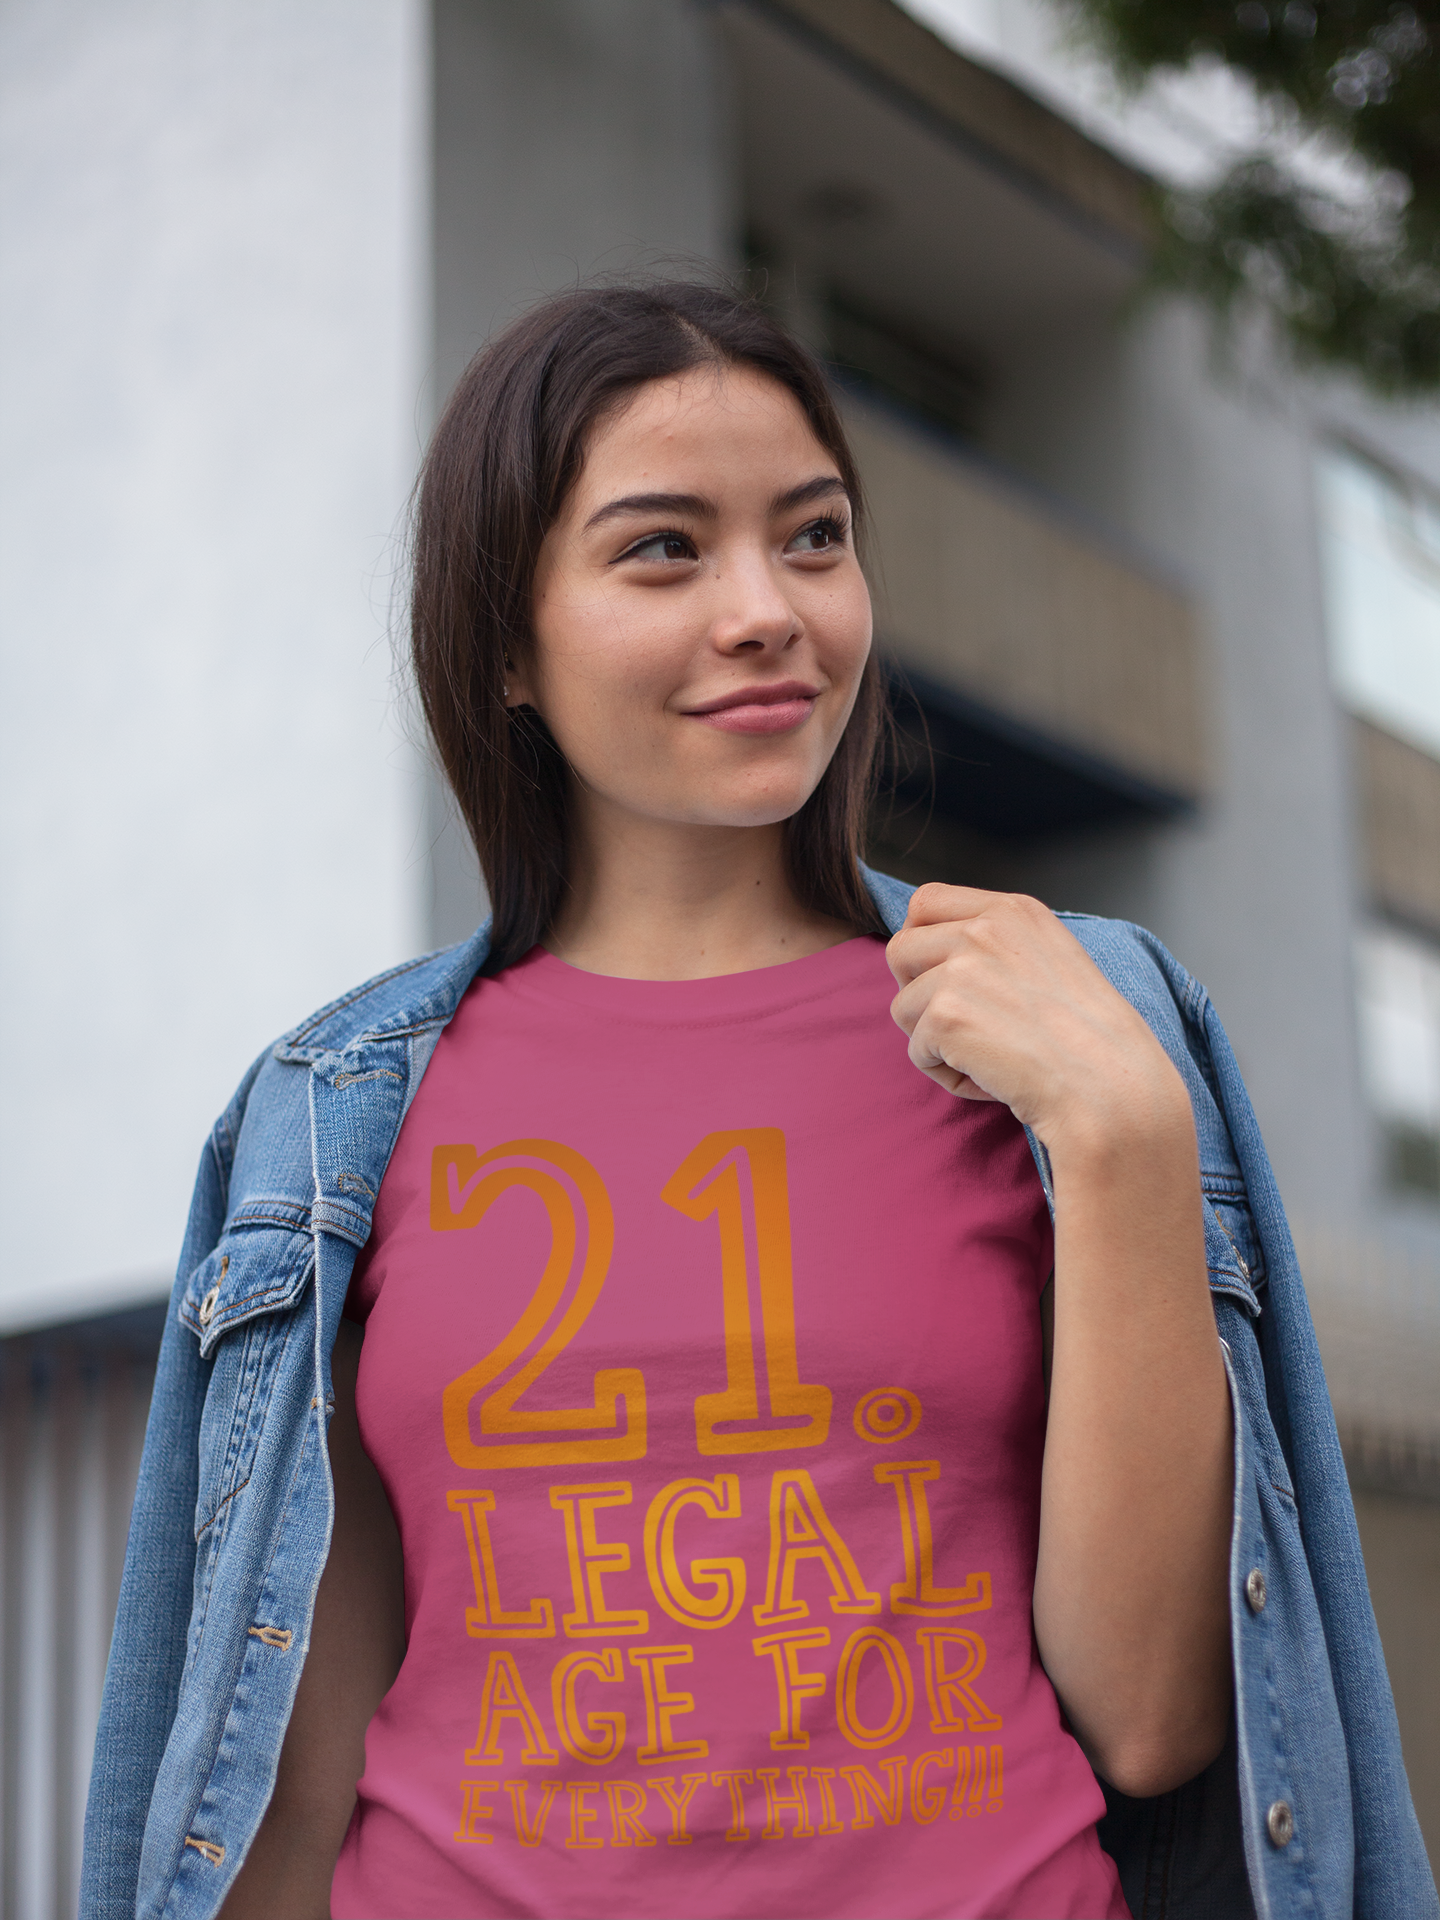 21, Legal Age for Everything, Unisexshirt, Motivational Shirt, Inspirational Shirt, Positive Shirts, Gift Ideas for Women, Gift Ideas for Men